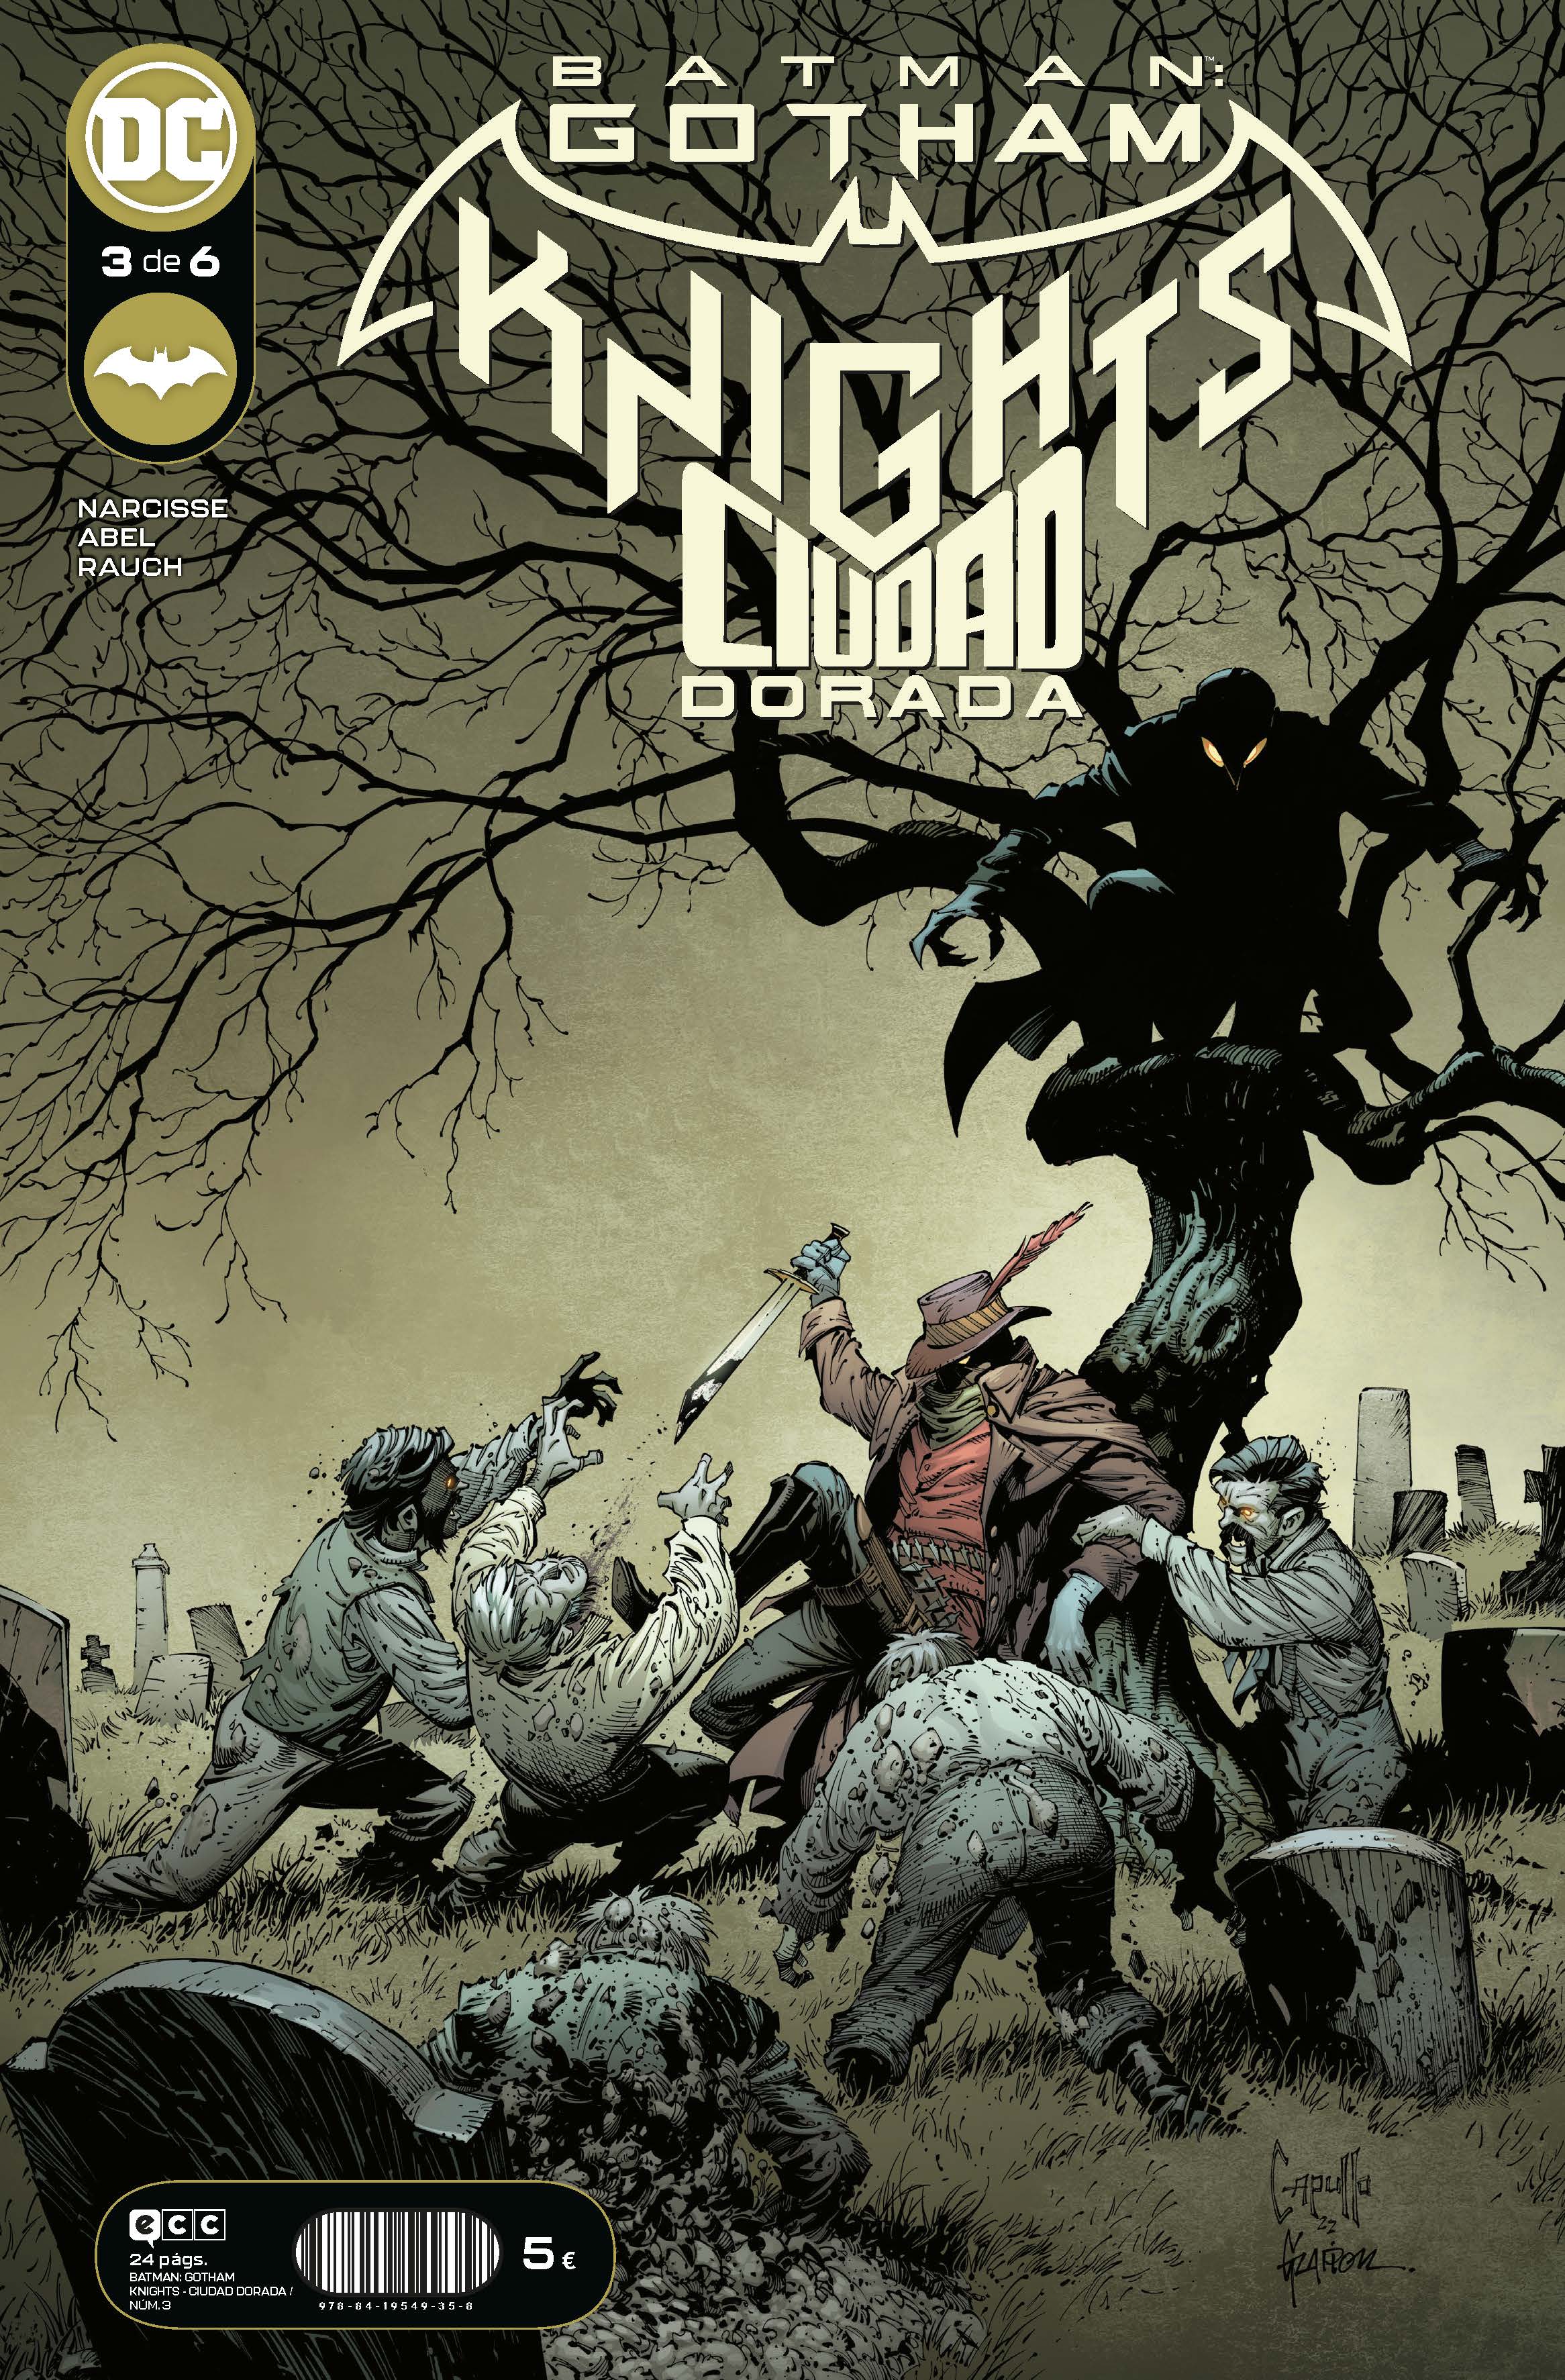 BATMAN: GOTHAM KNIGHTS - CIUDAD DORADA #3 (de 6)